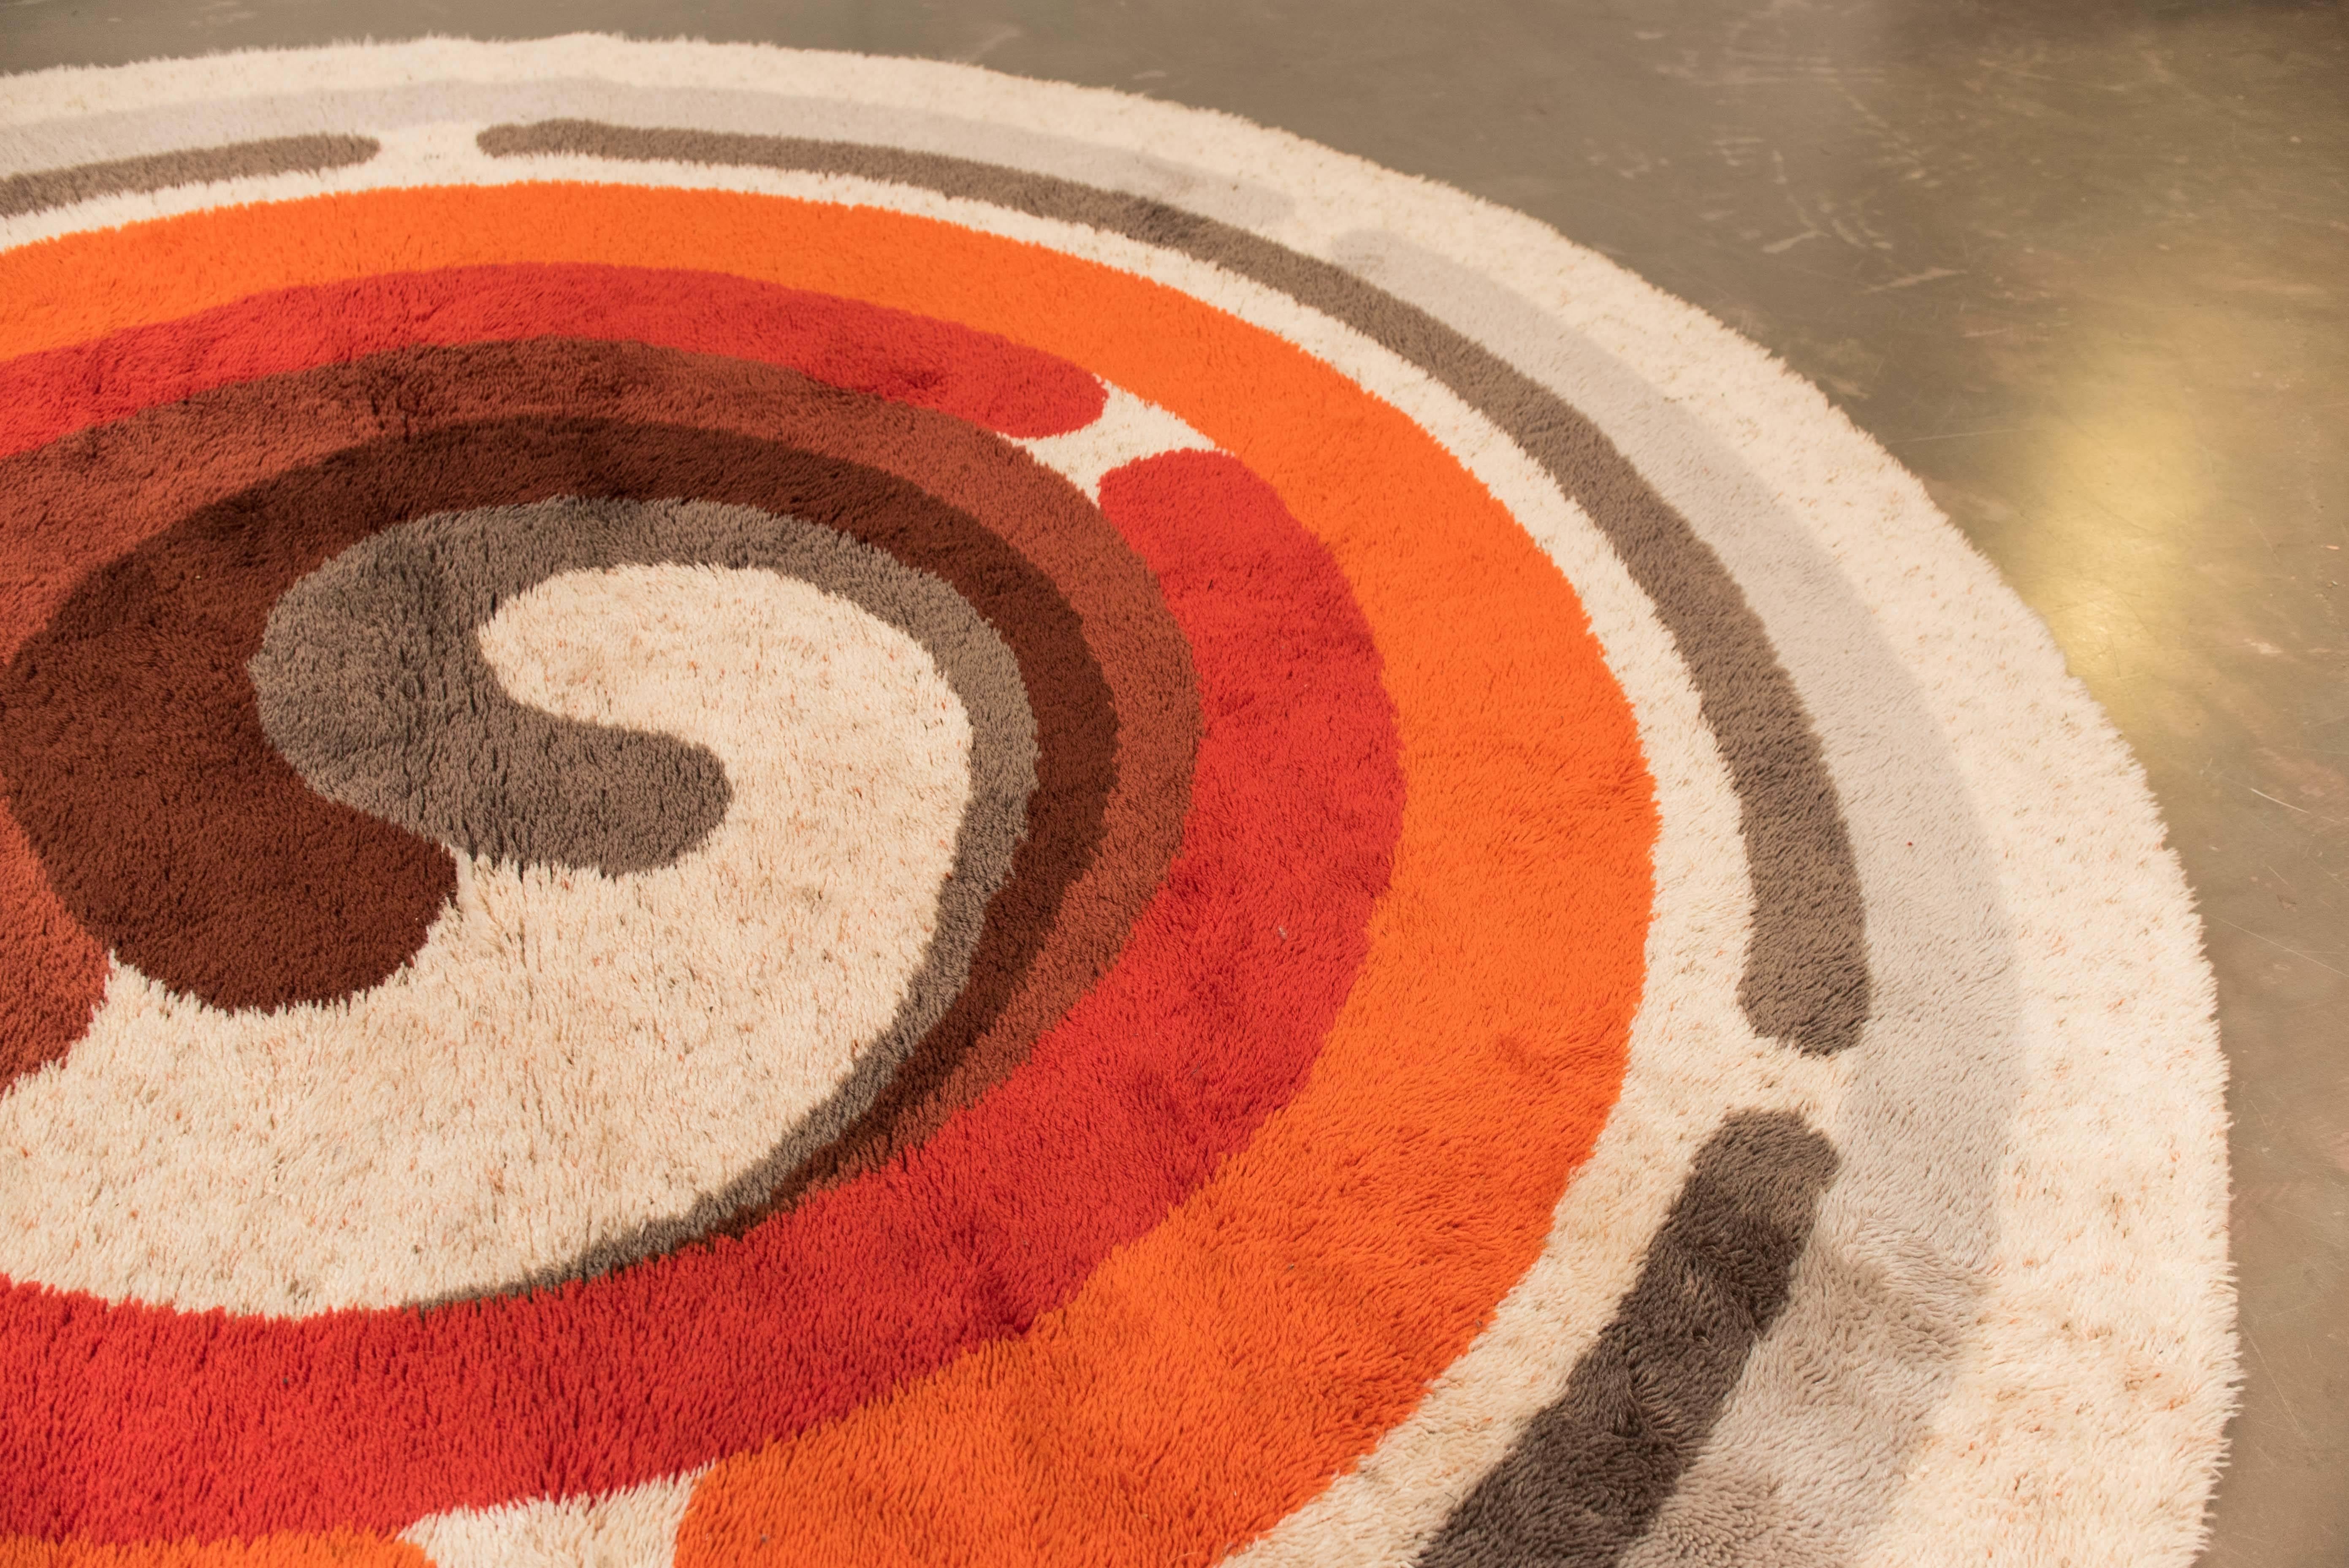 Original Op Art round carpet by Desso, 1960s, 100% natural wool.